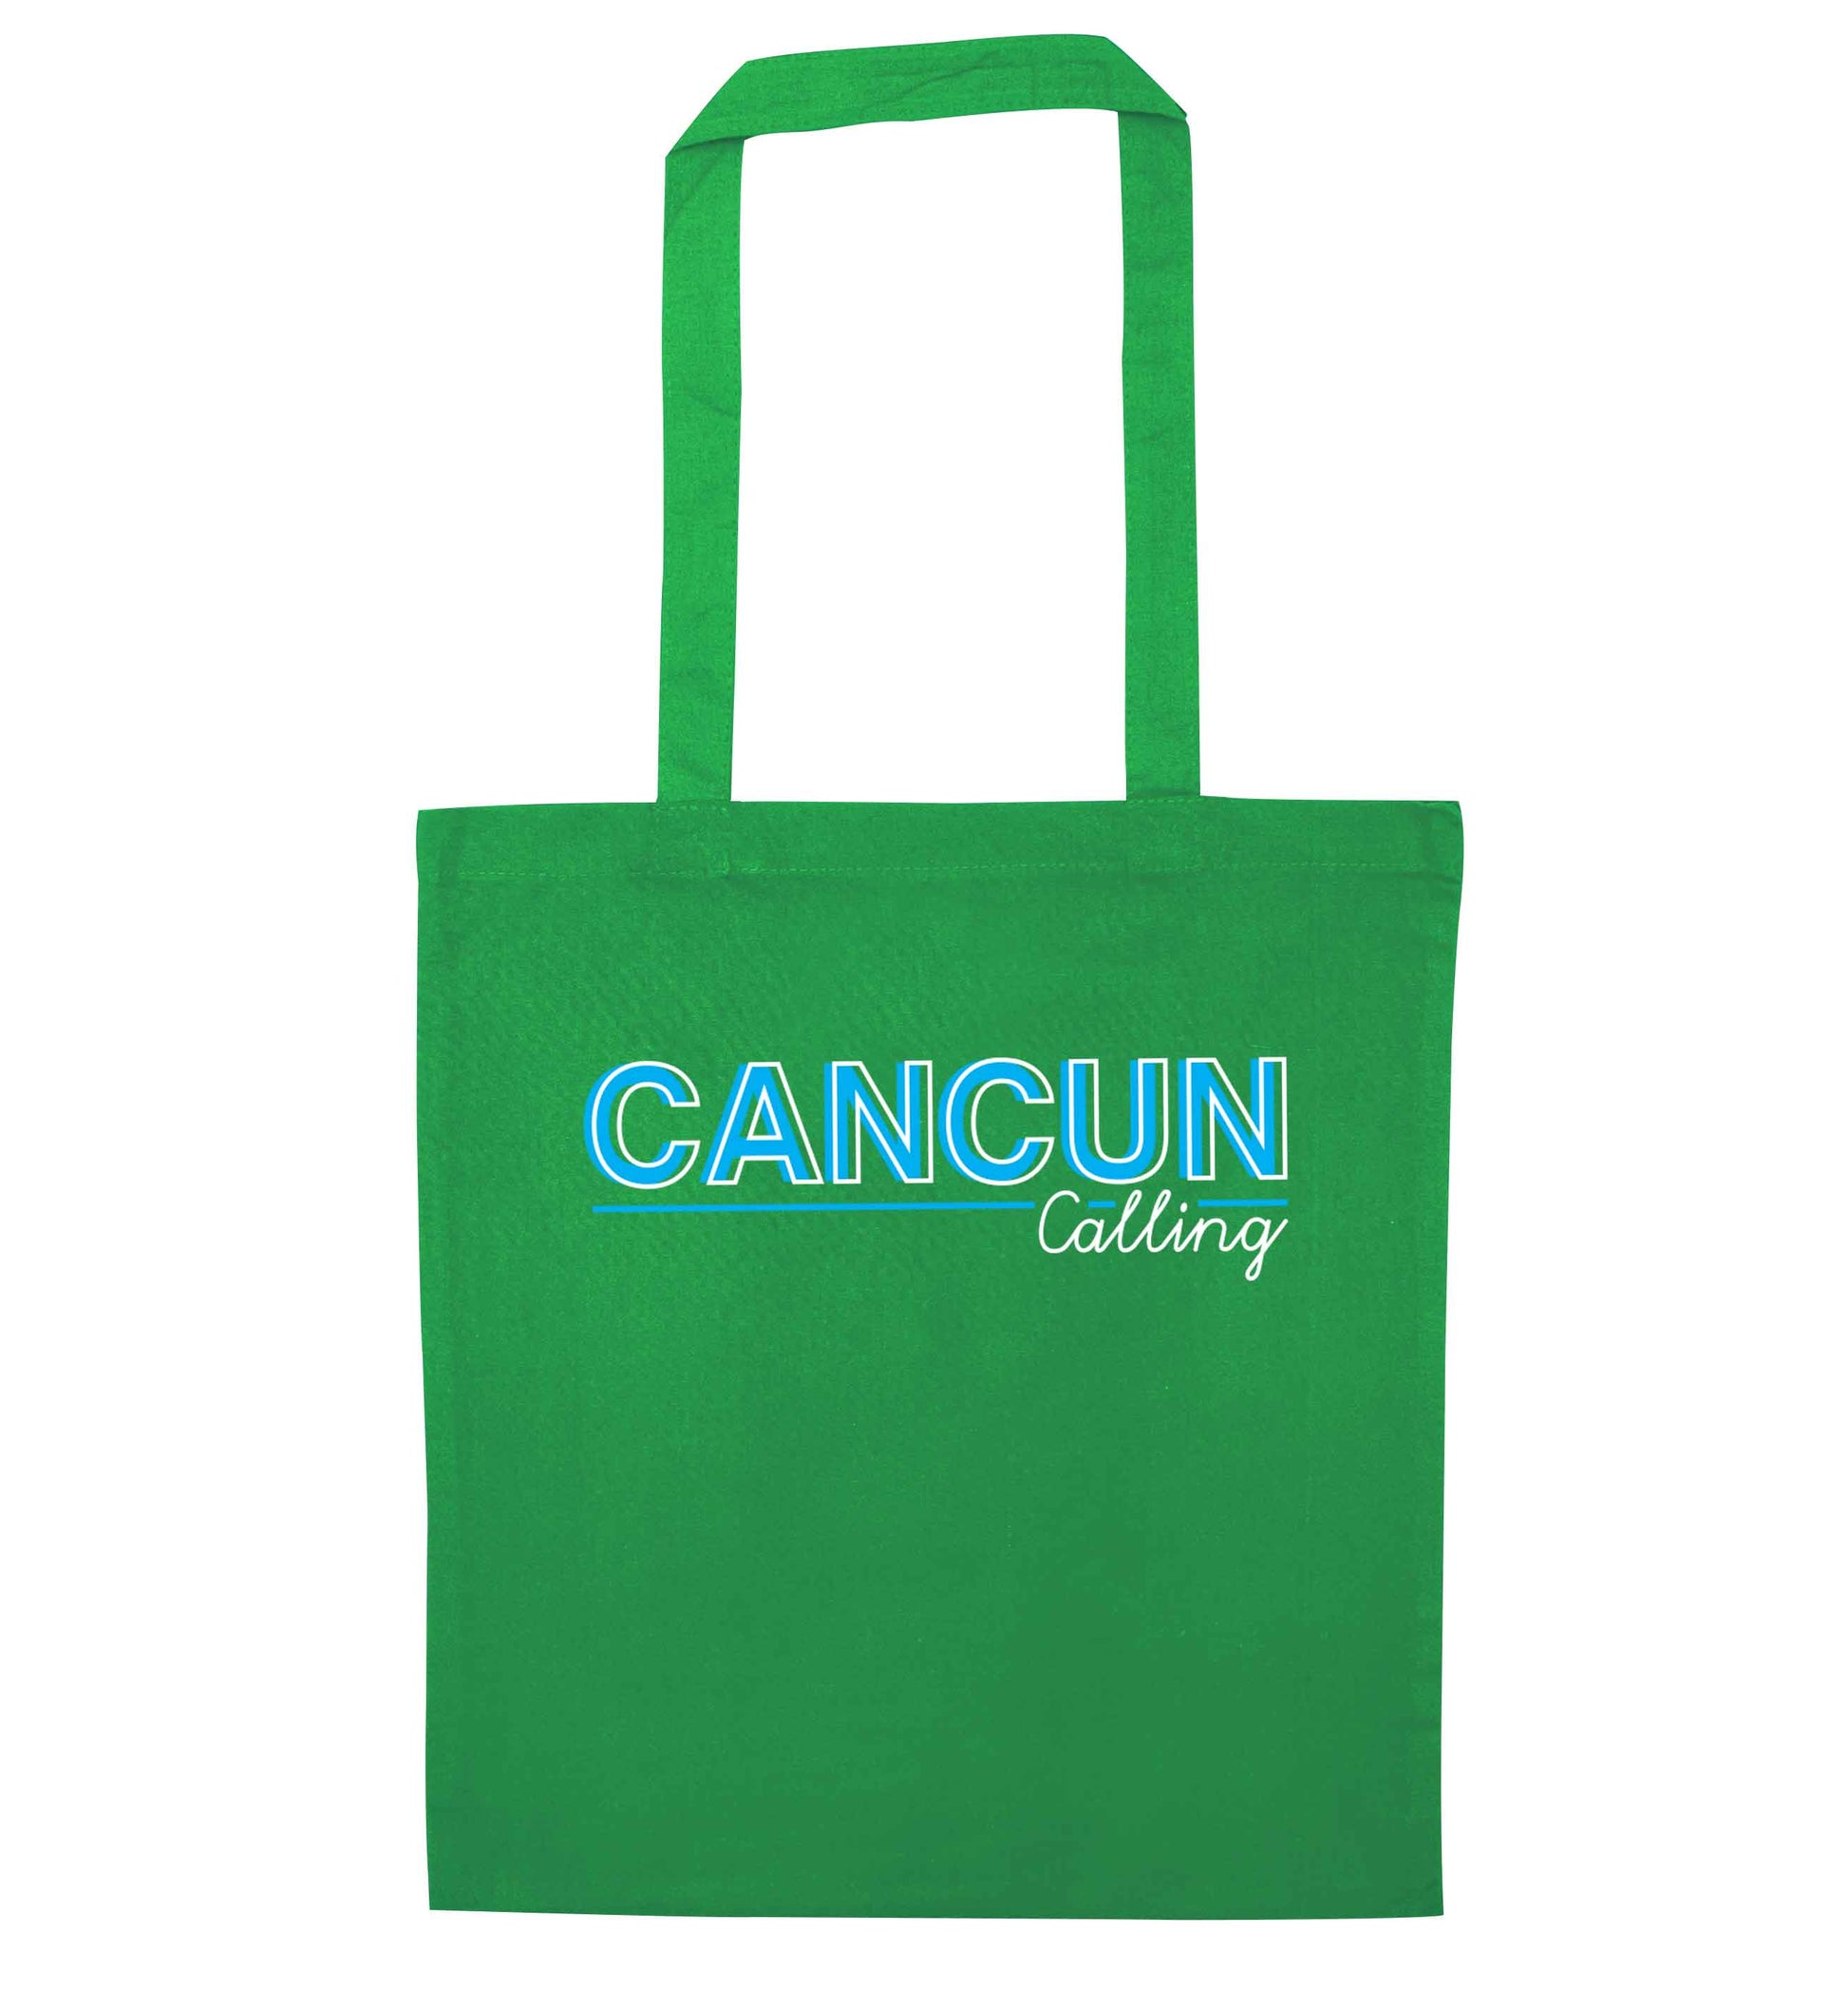 Cancun calling green tote bag